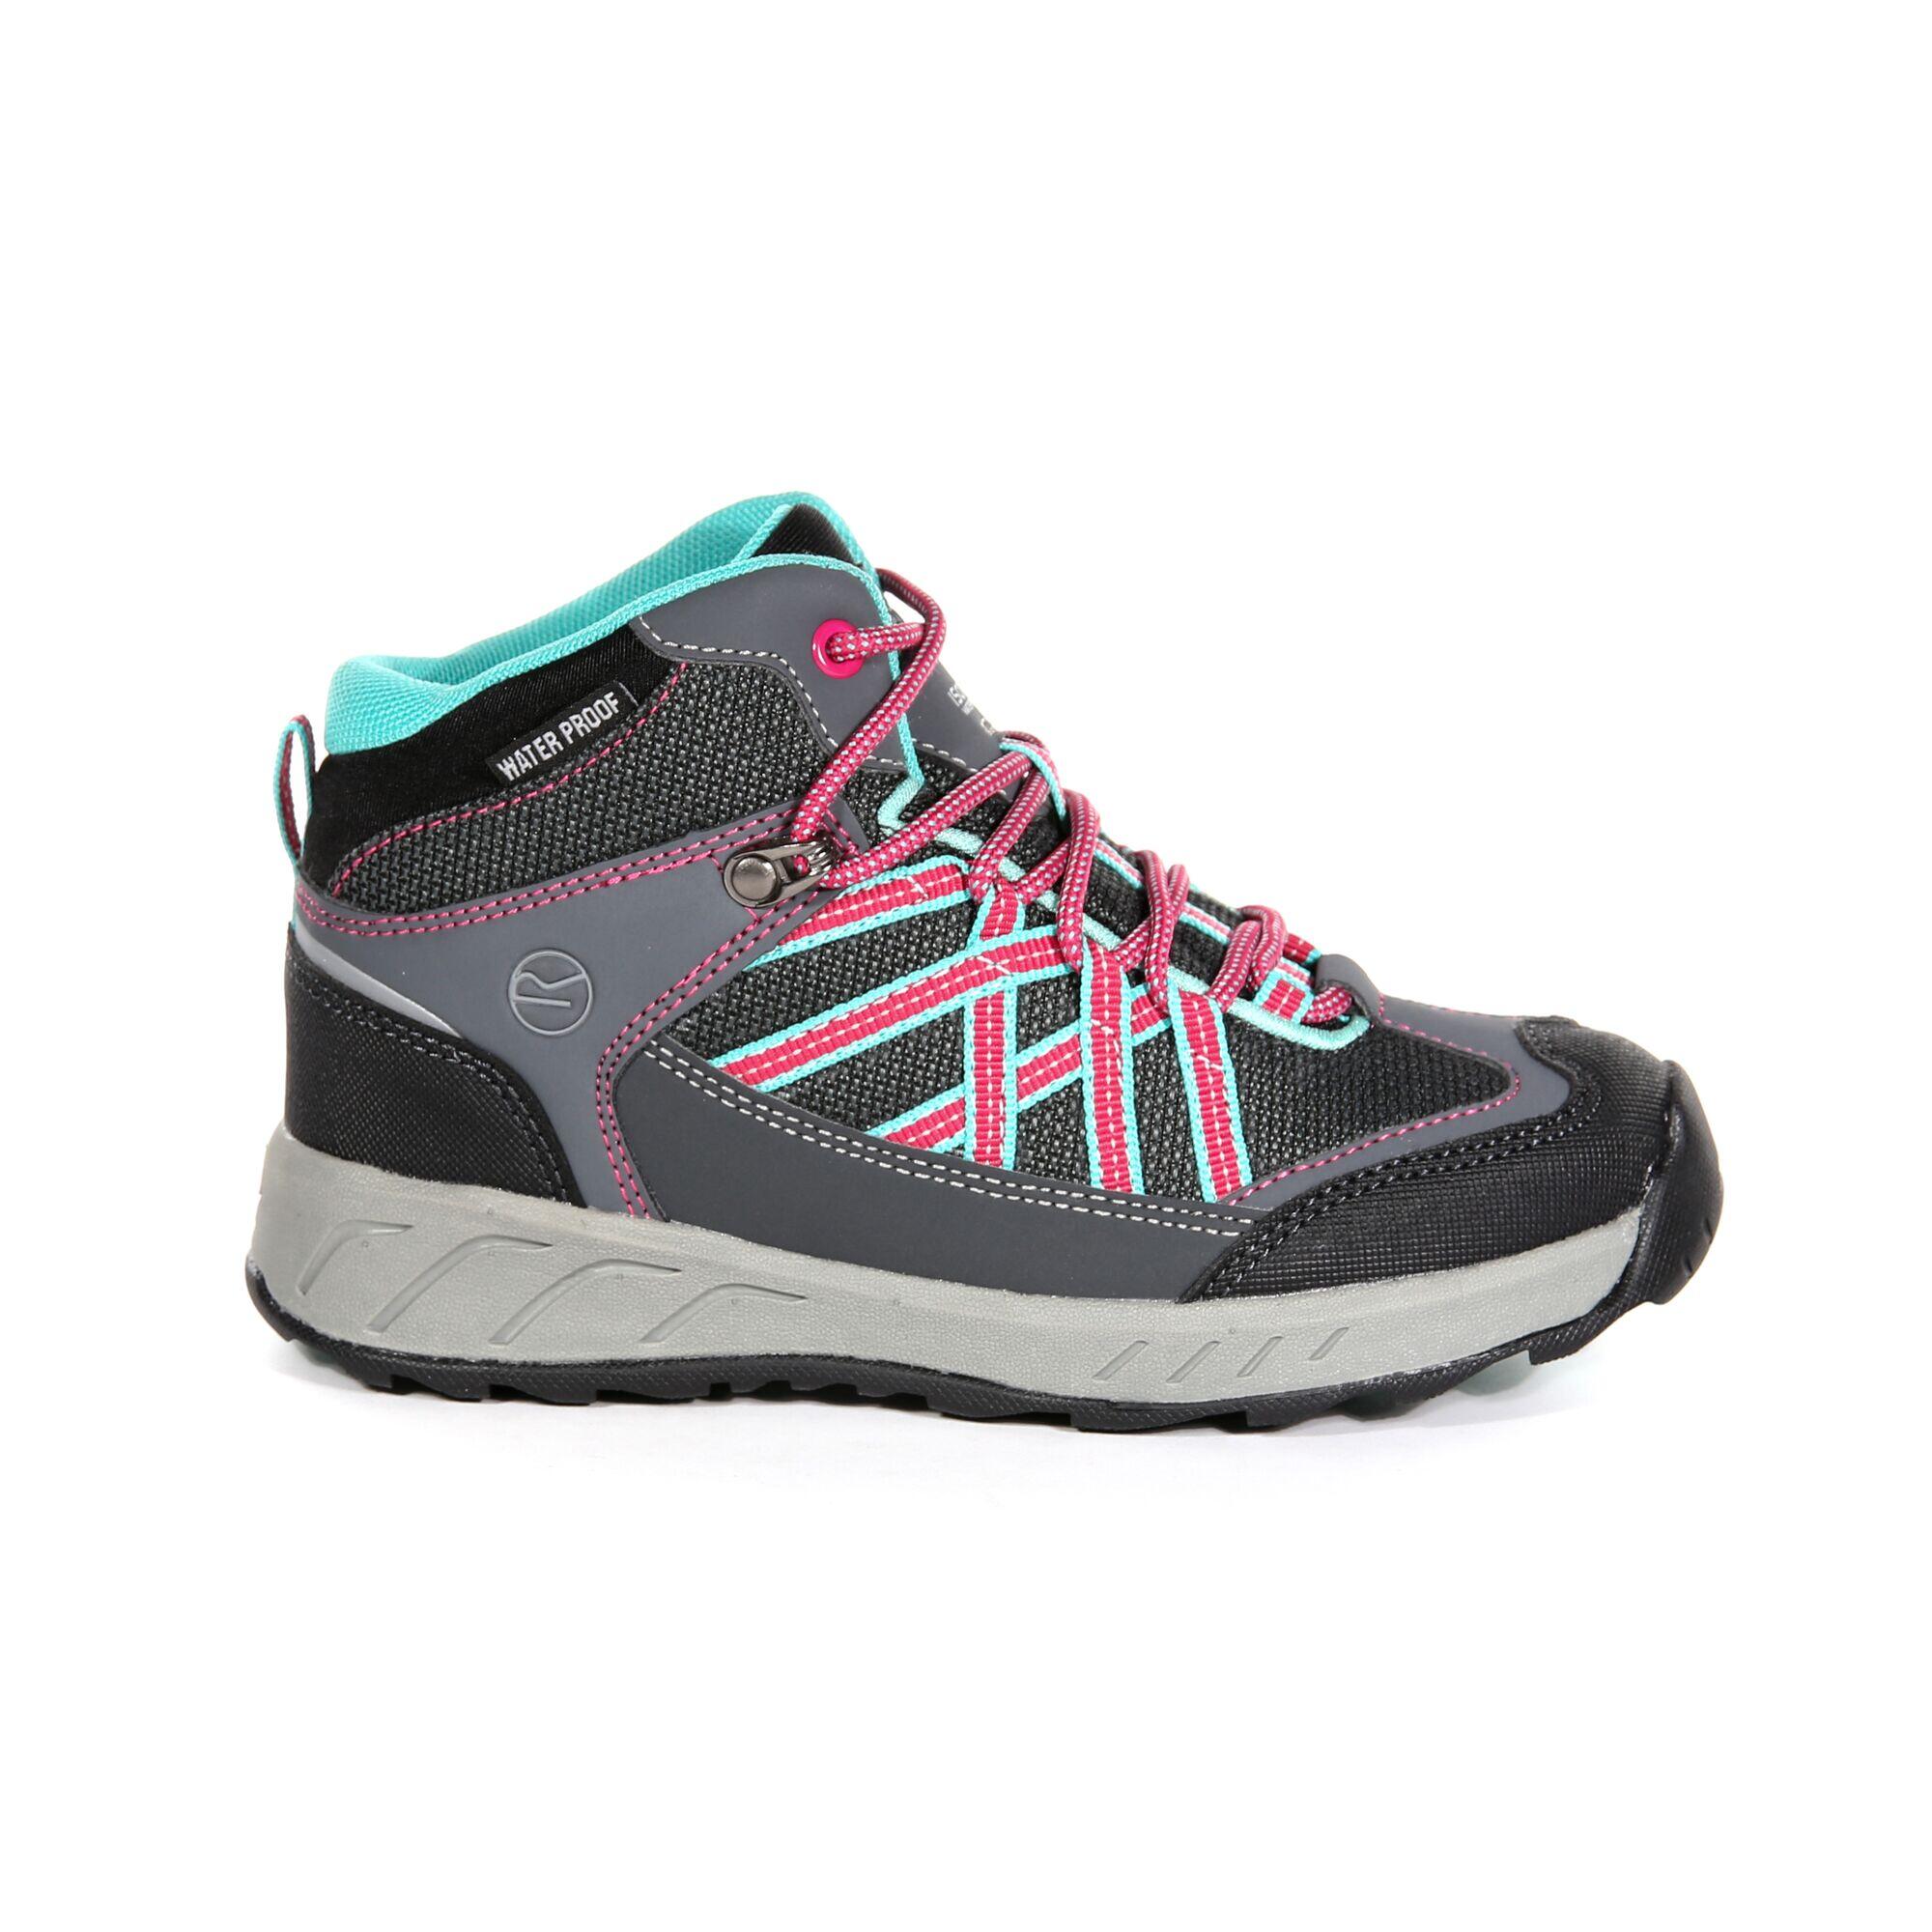 Samaris Kids' Hiking Waterproof Mid Boots - Light Grey/Pink 1/5